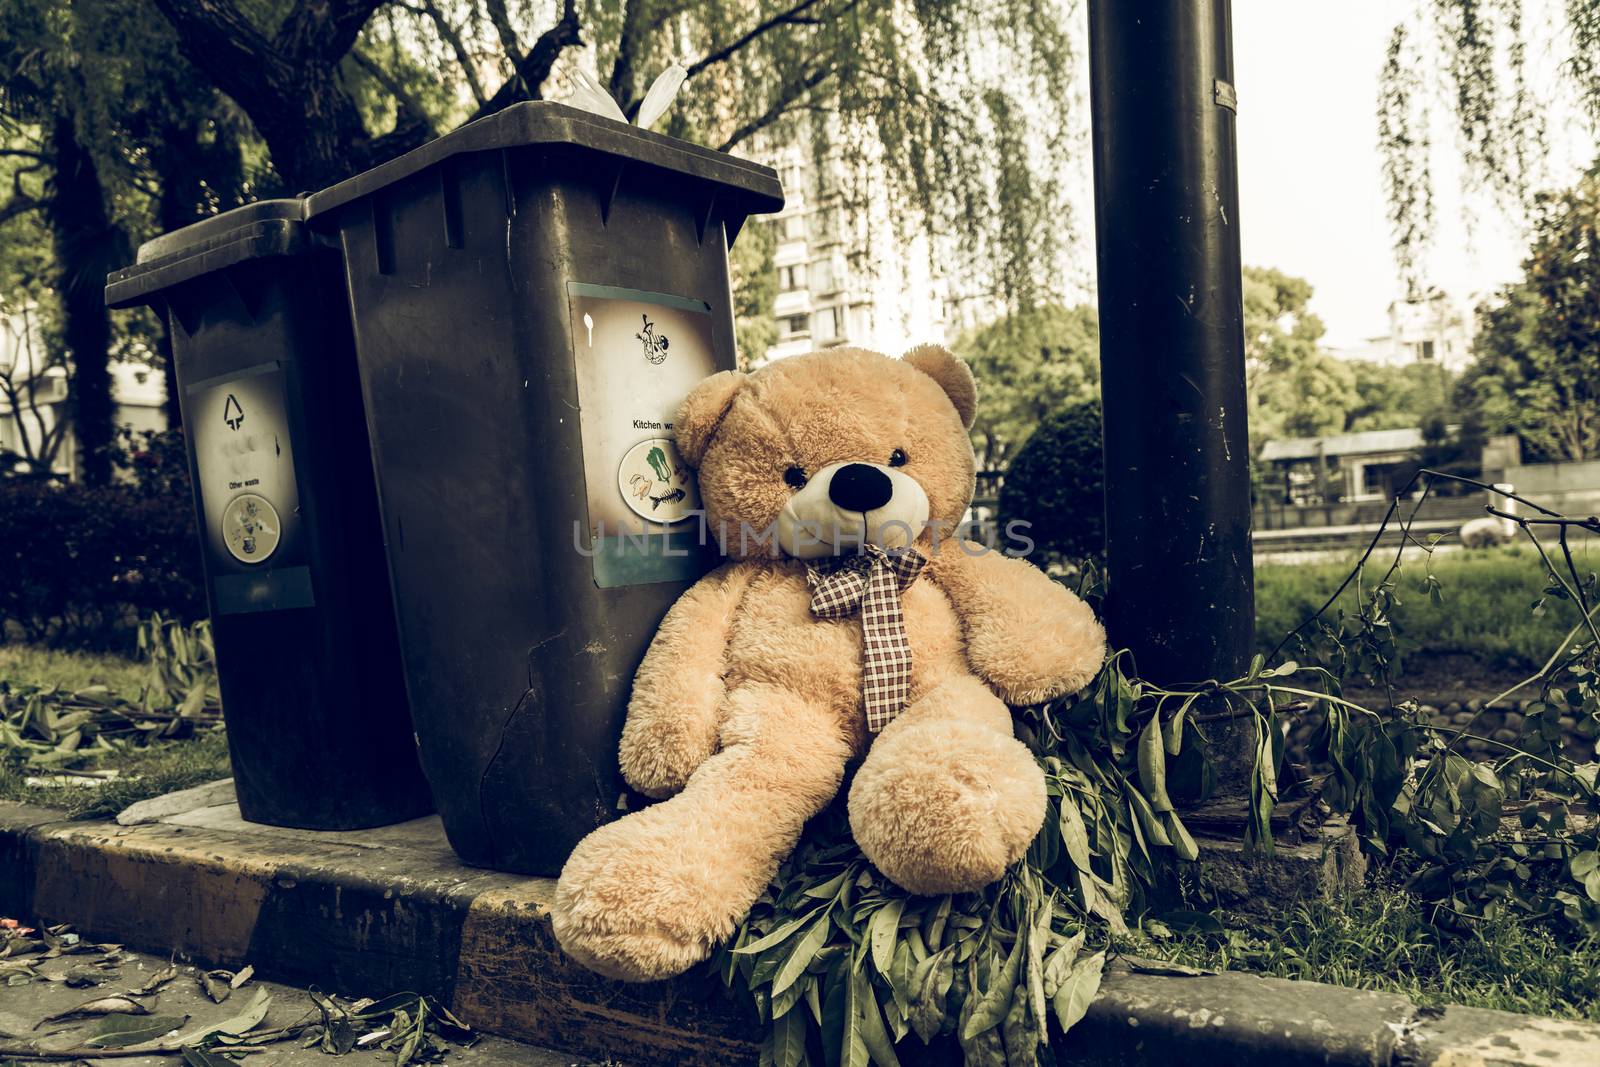 The teddy-bear was throw away sitting byside the garbage trash by psodaz